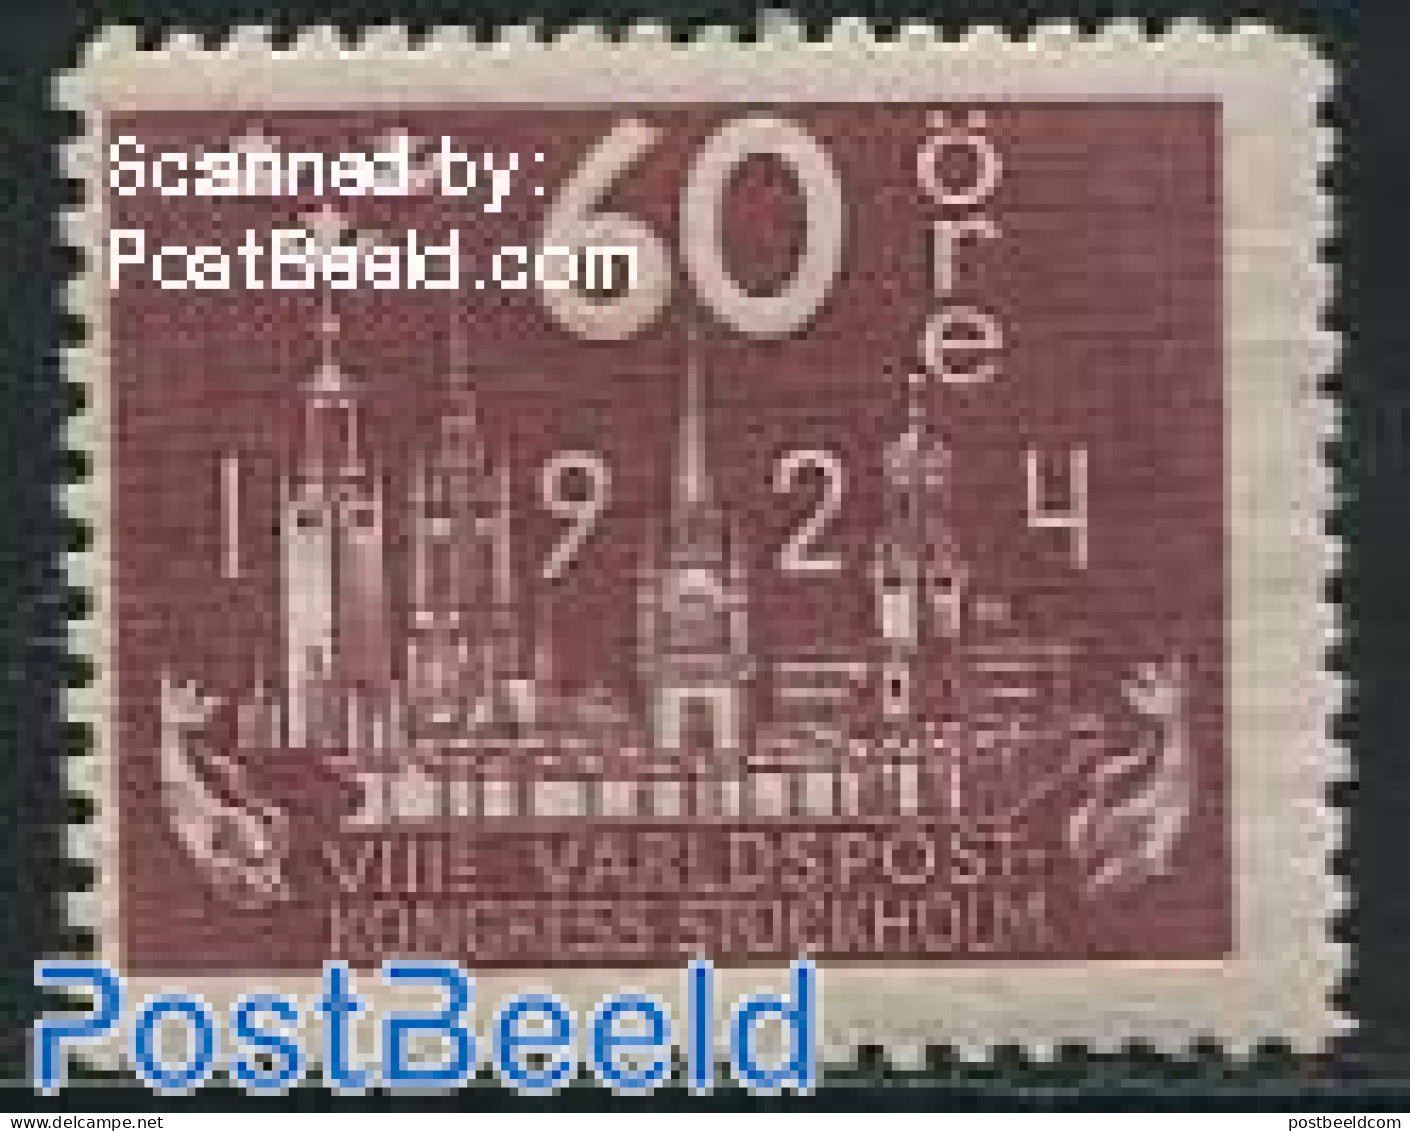 Sweden 1924 60o, Stamp Out Of Set, Mint NH - Ongebruikt